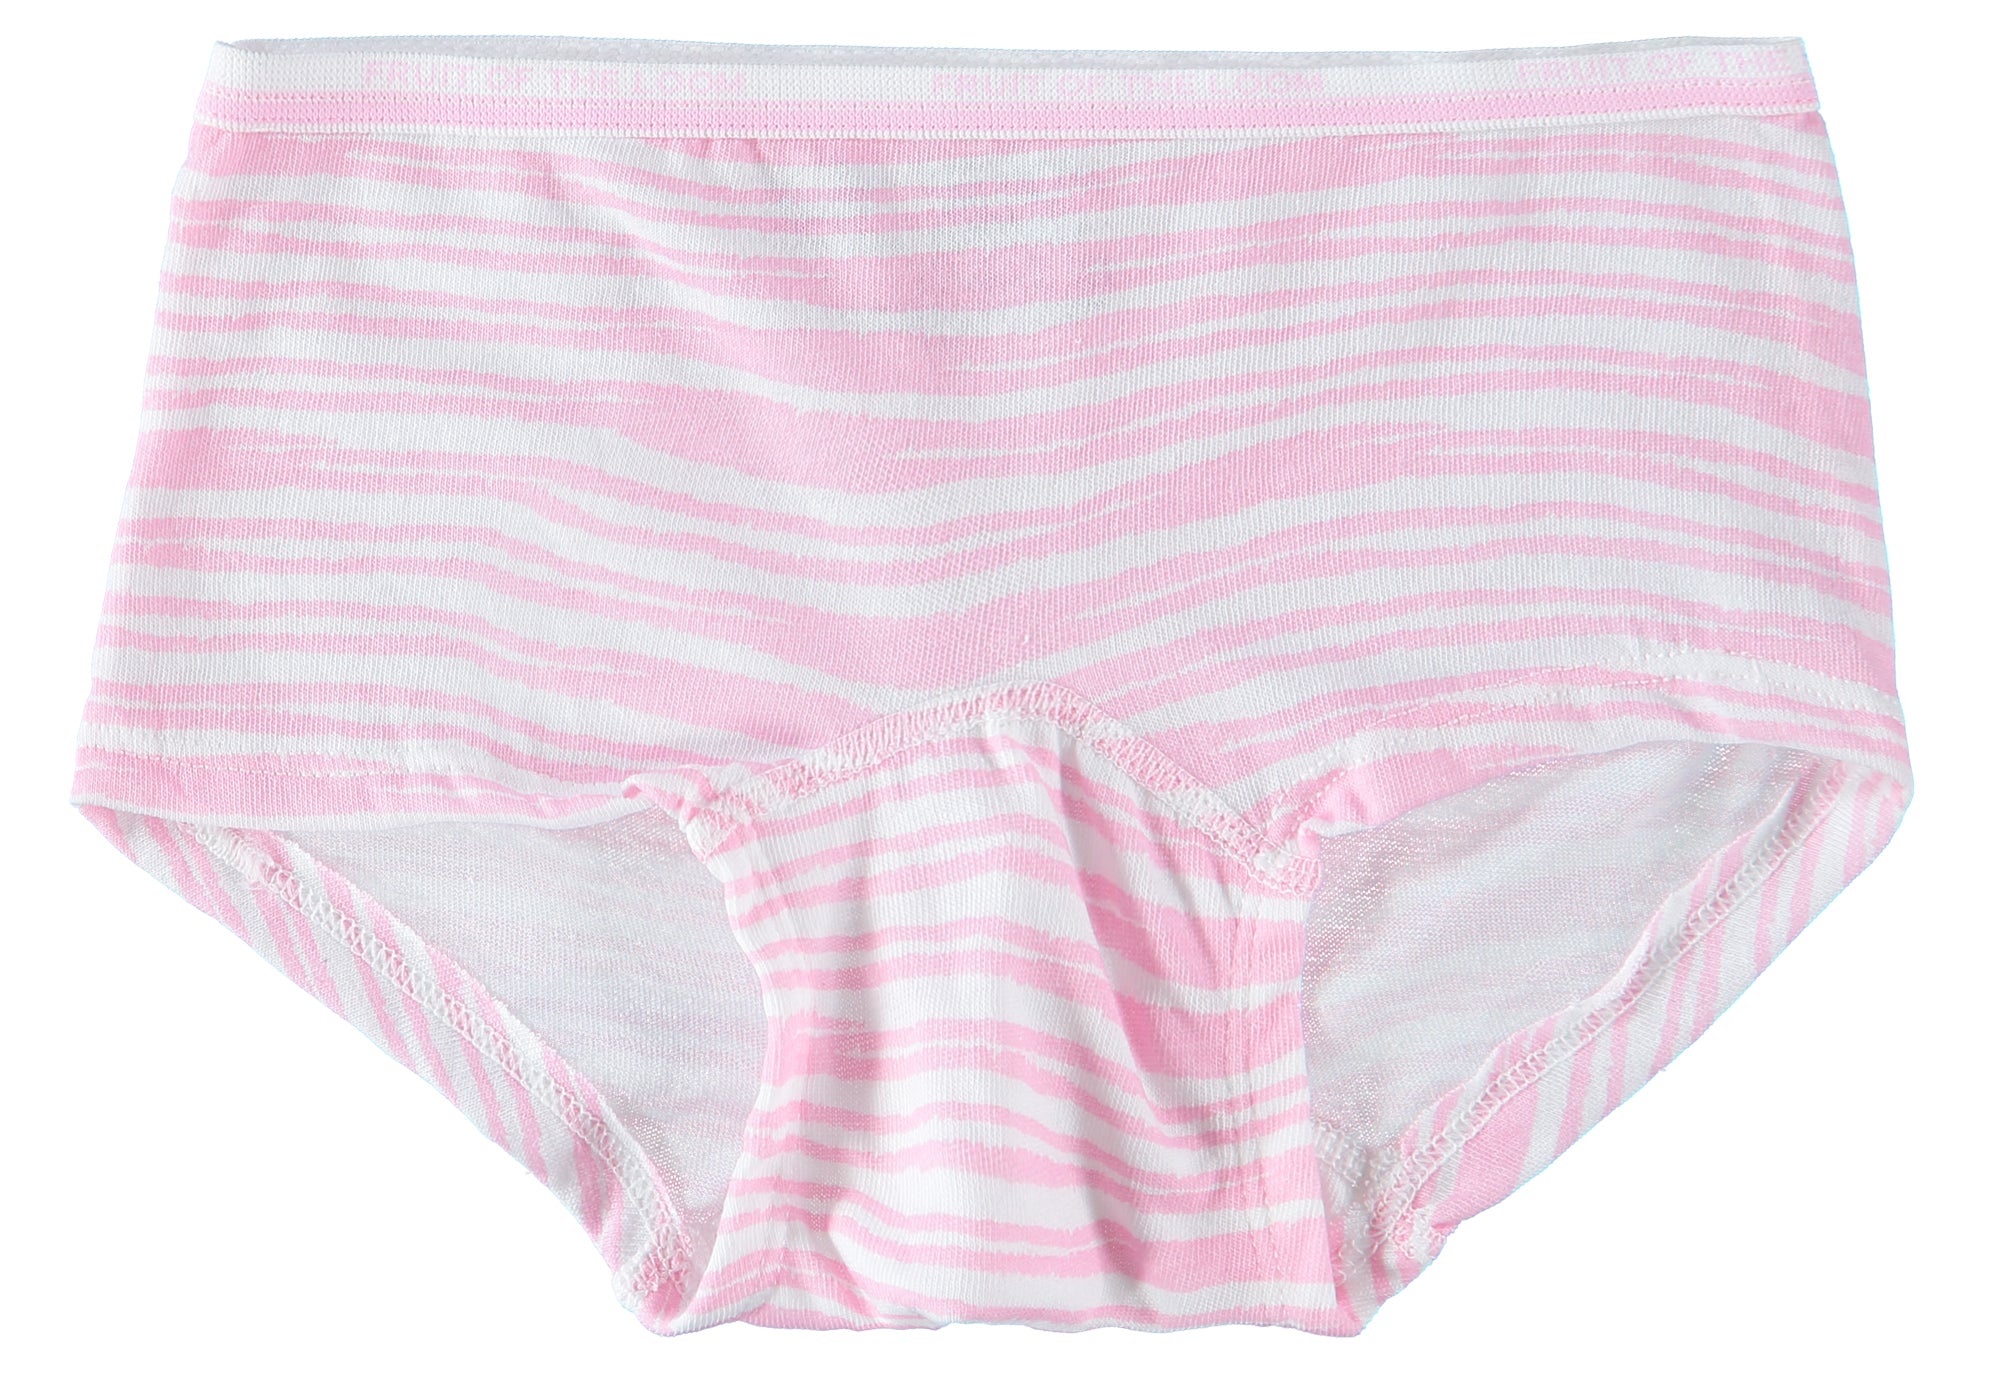 Fruit of the Loom Girls 6-16 Boyshort Underwear, 6 Pack